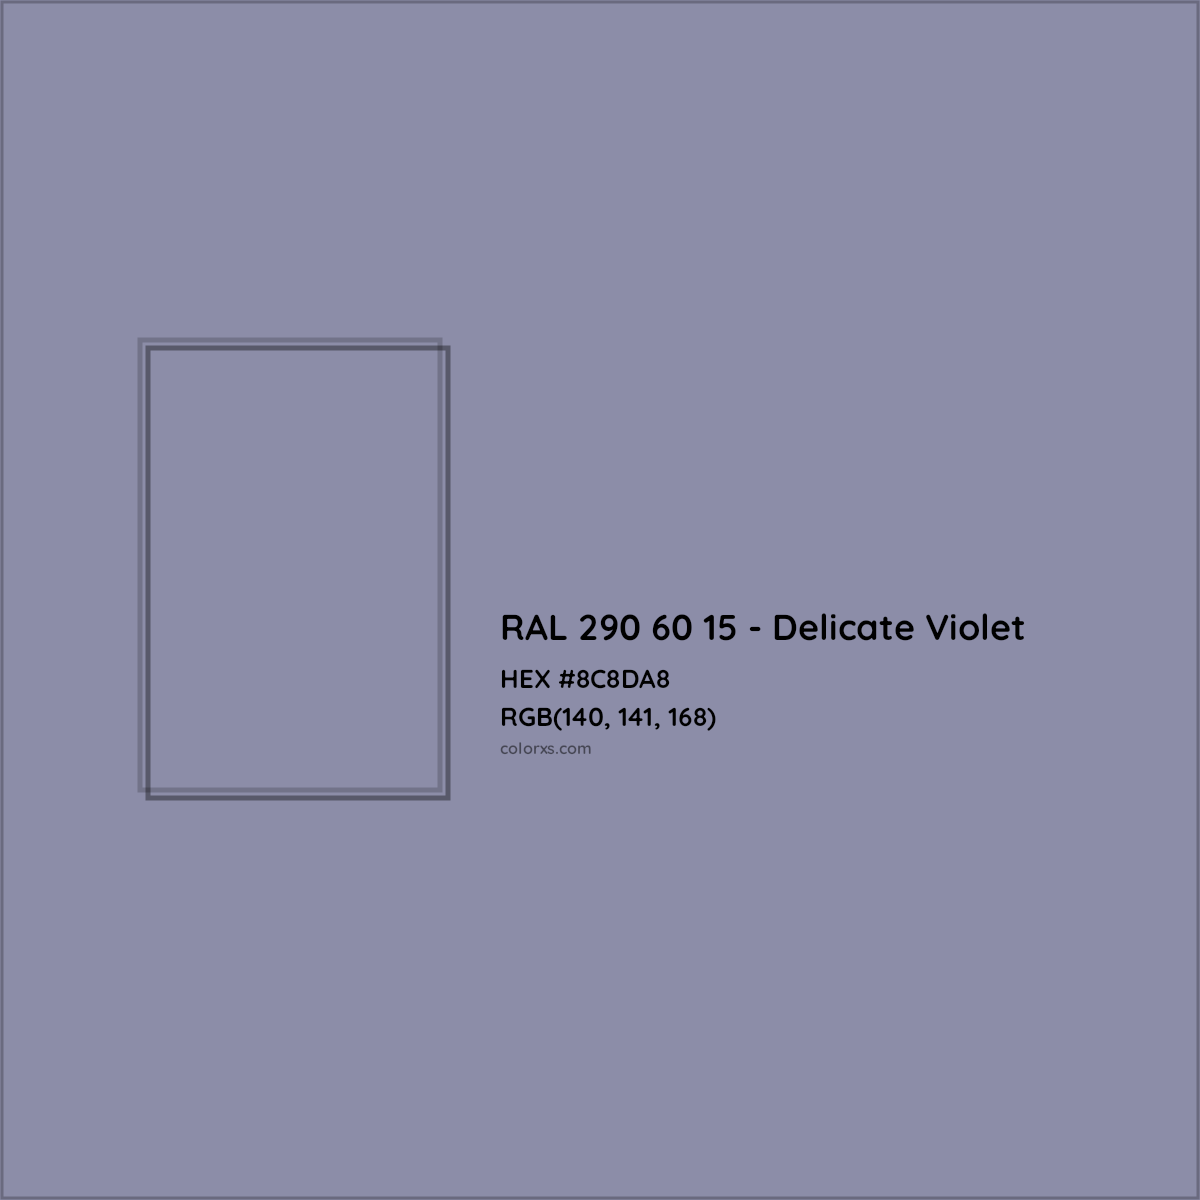 HEX #8C8DA8 RAL 290 60 15 - Delicate Violet CMS RAL Design - Color Code